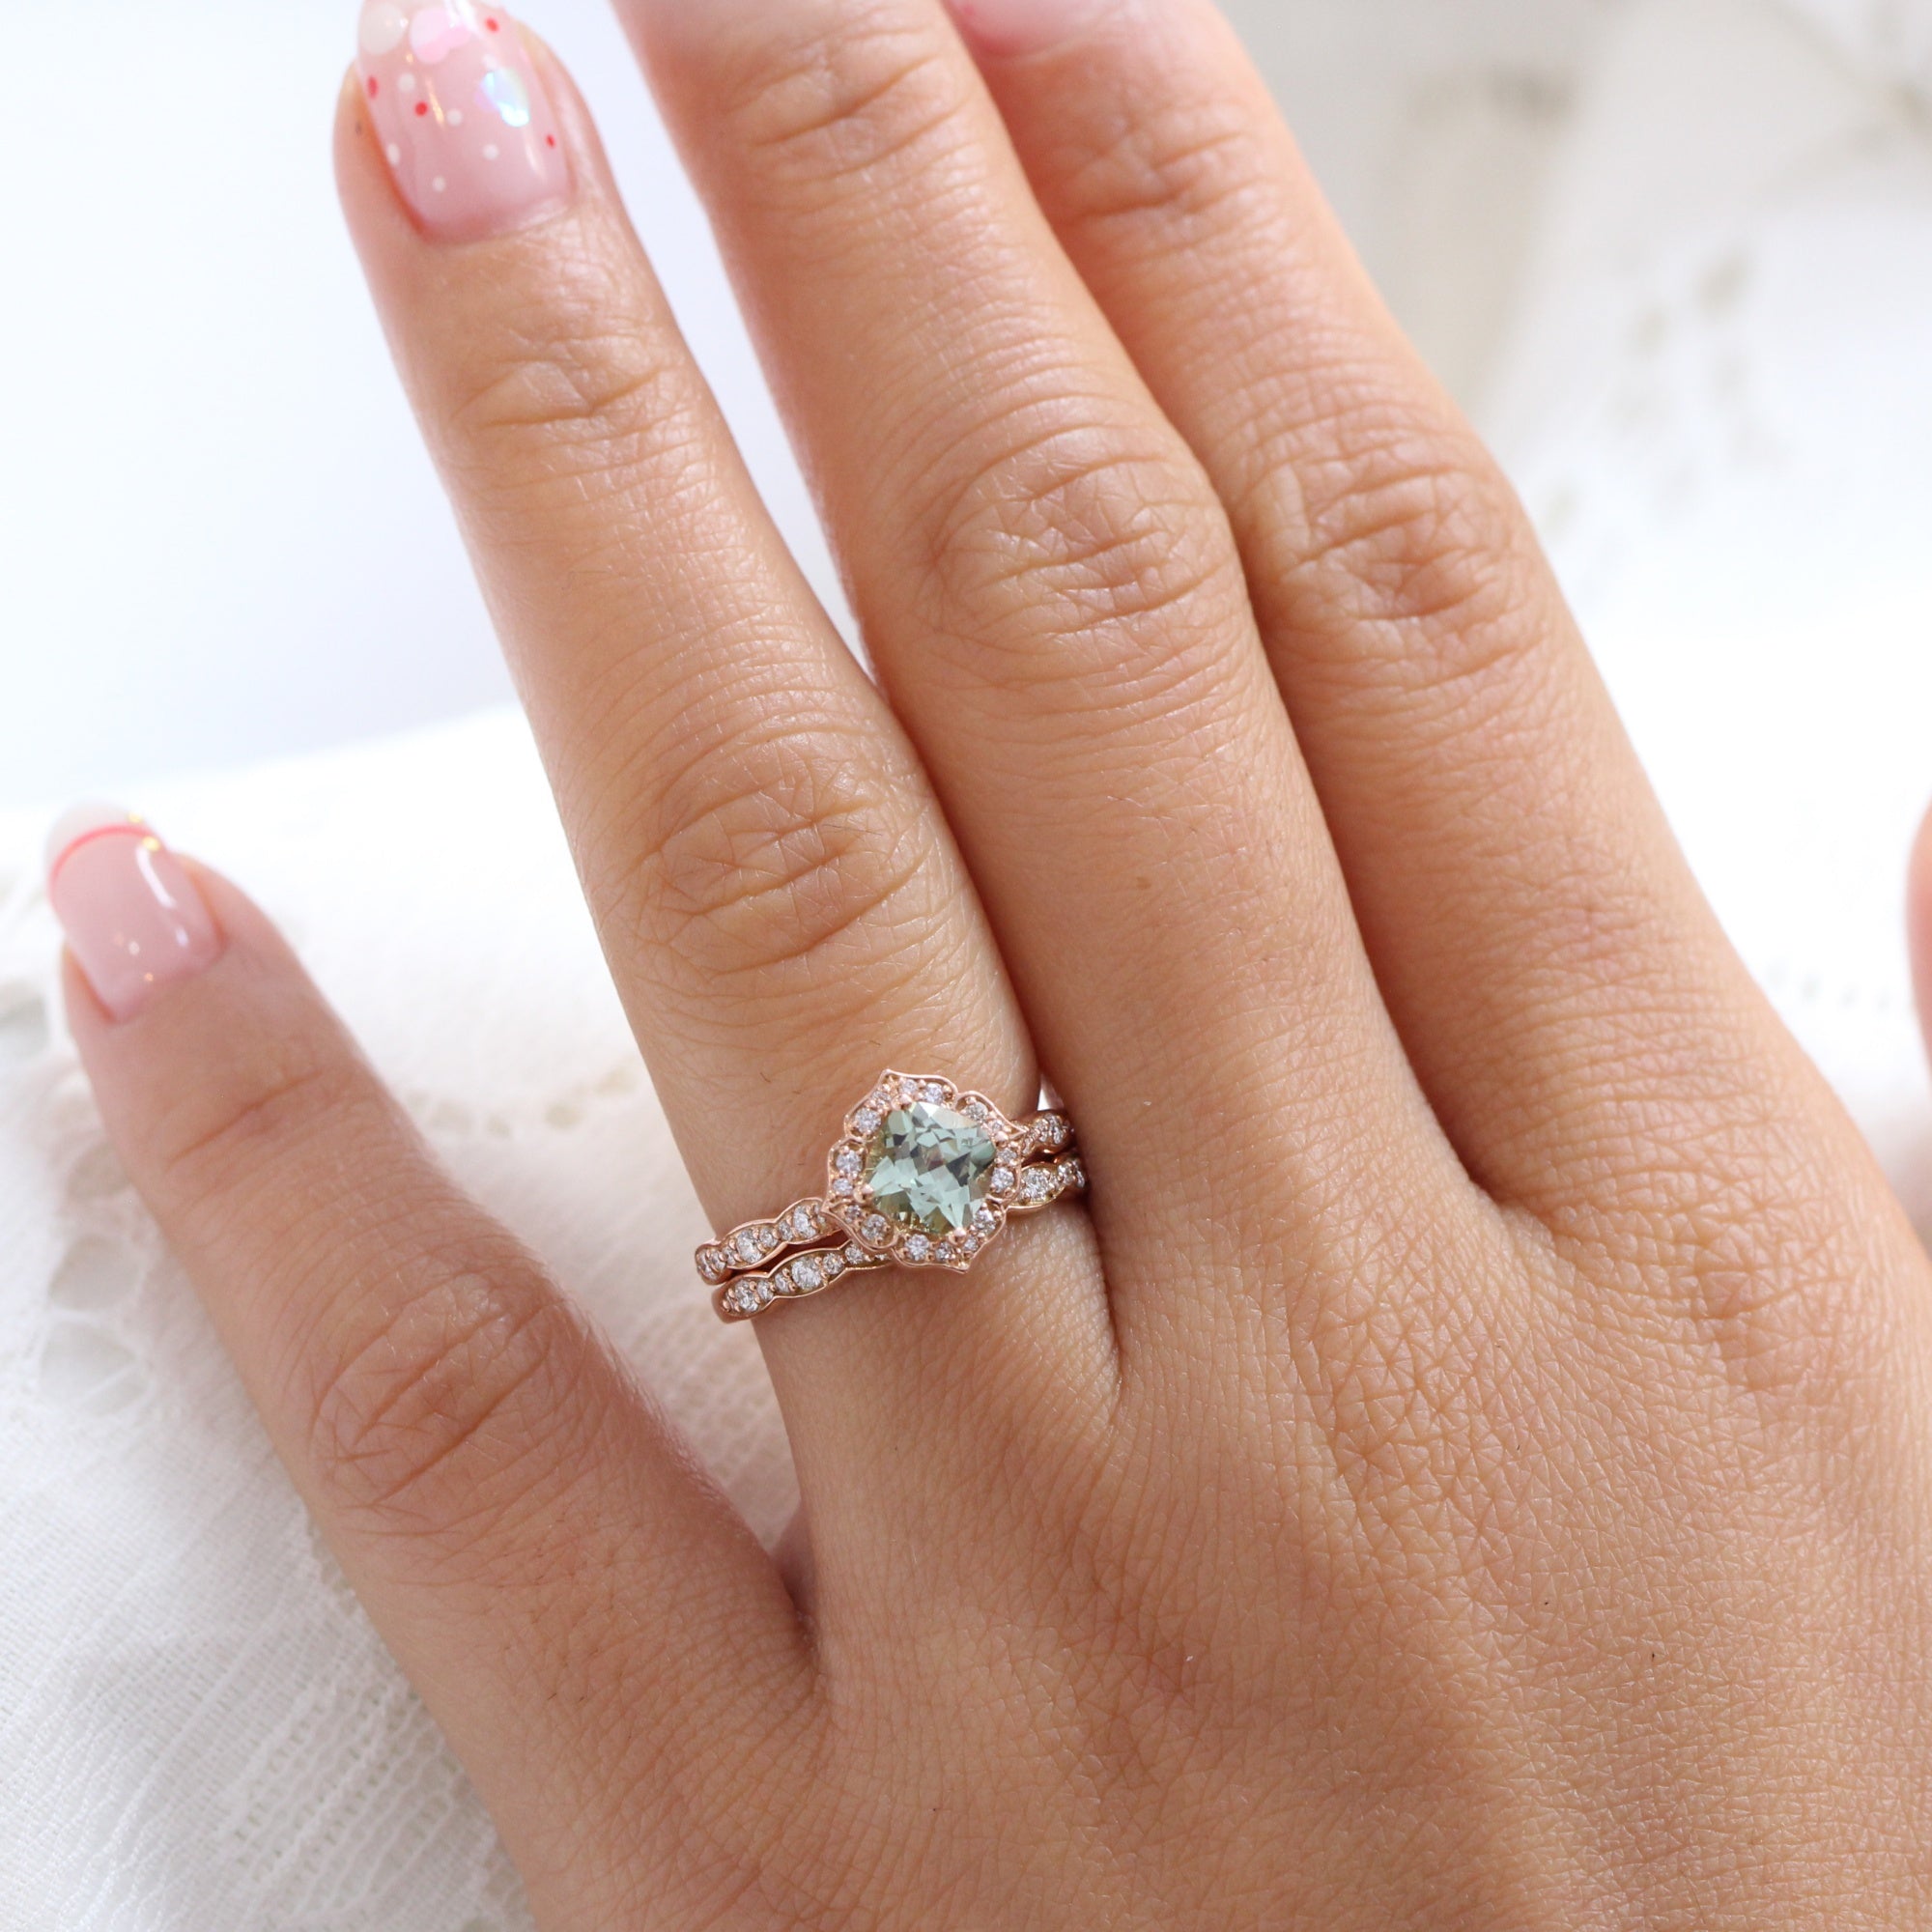 Cushion green sapphire ring rose gold matching diamond wedding band la more design jewelry